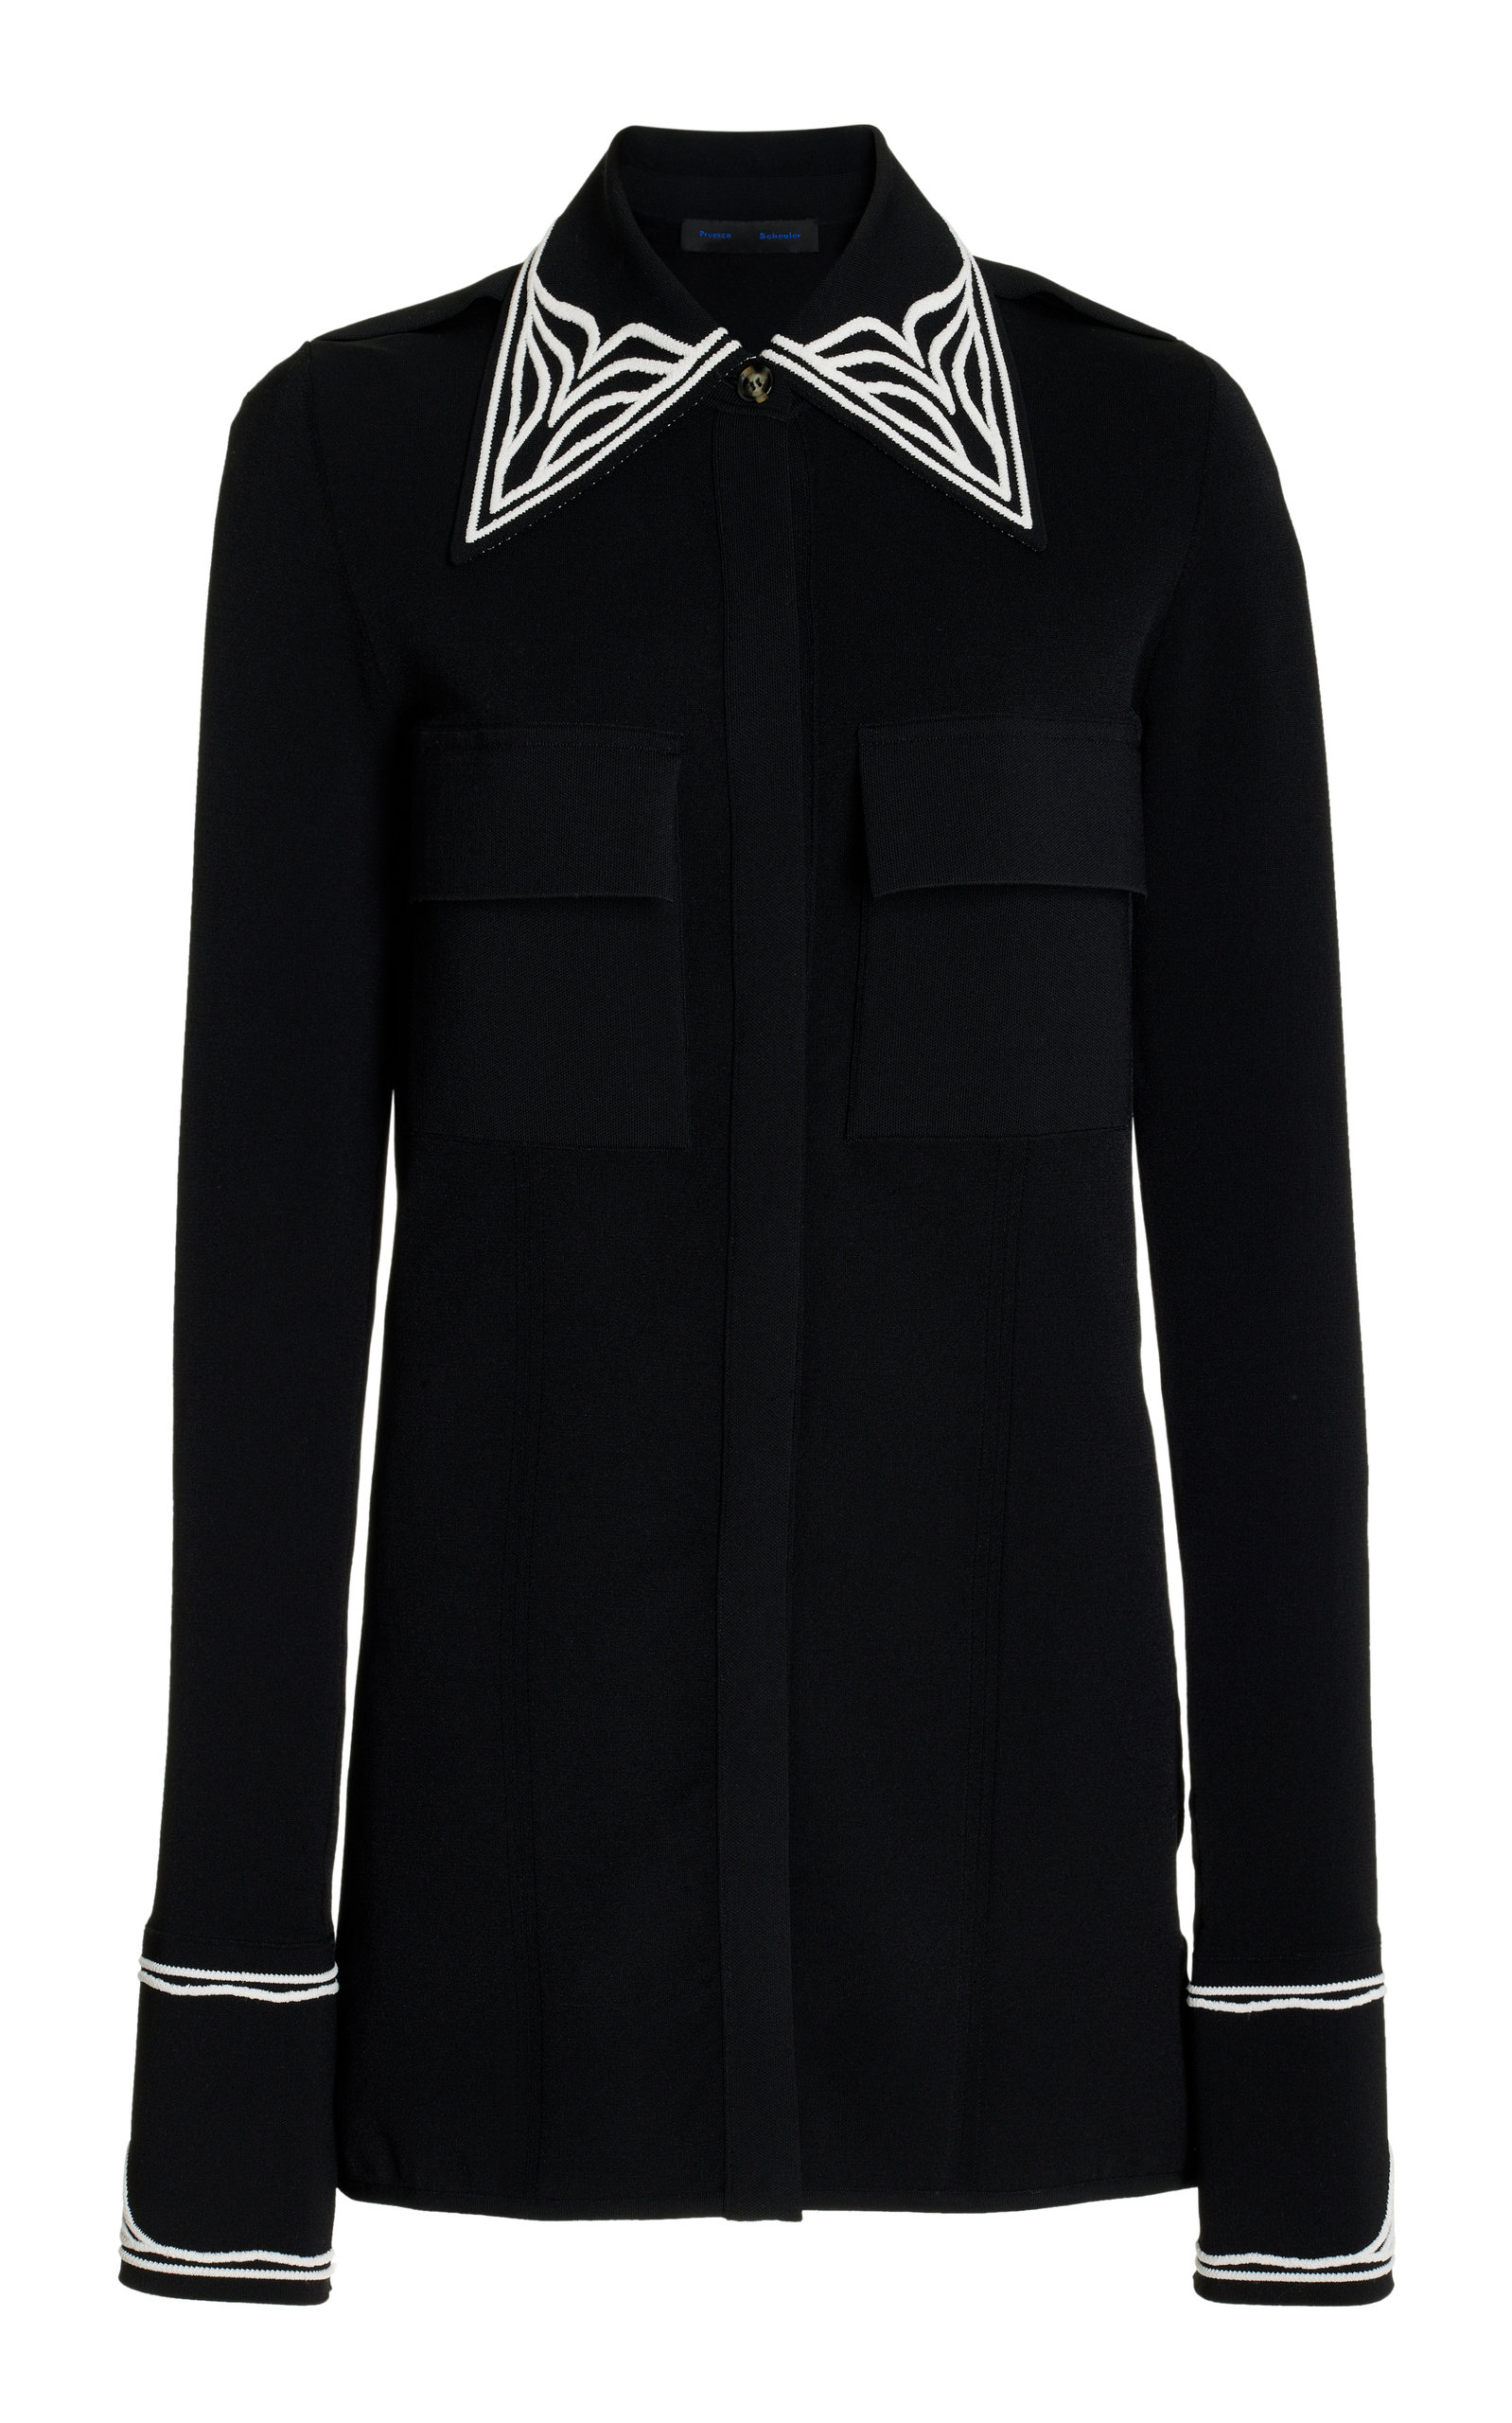 Proenza Schouler - Women's Embroidered Jacquard Knit Shirt - Black - XS - Moda Operandi